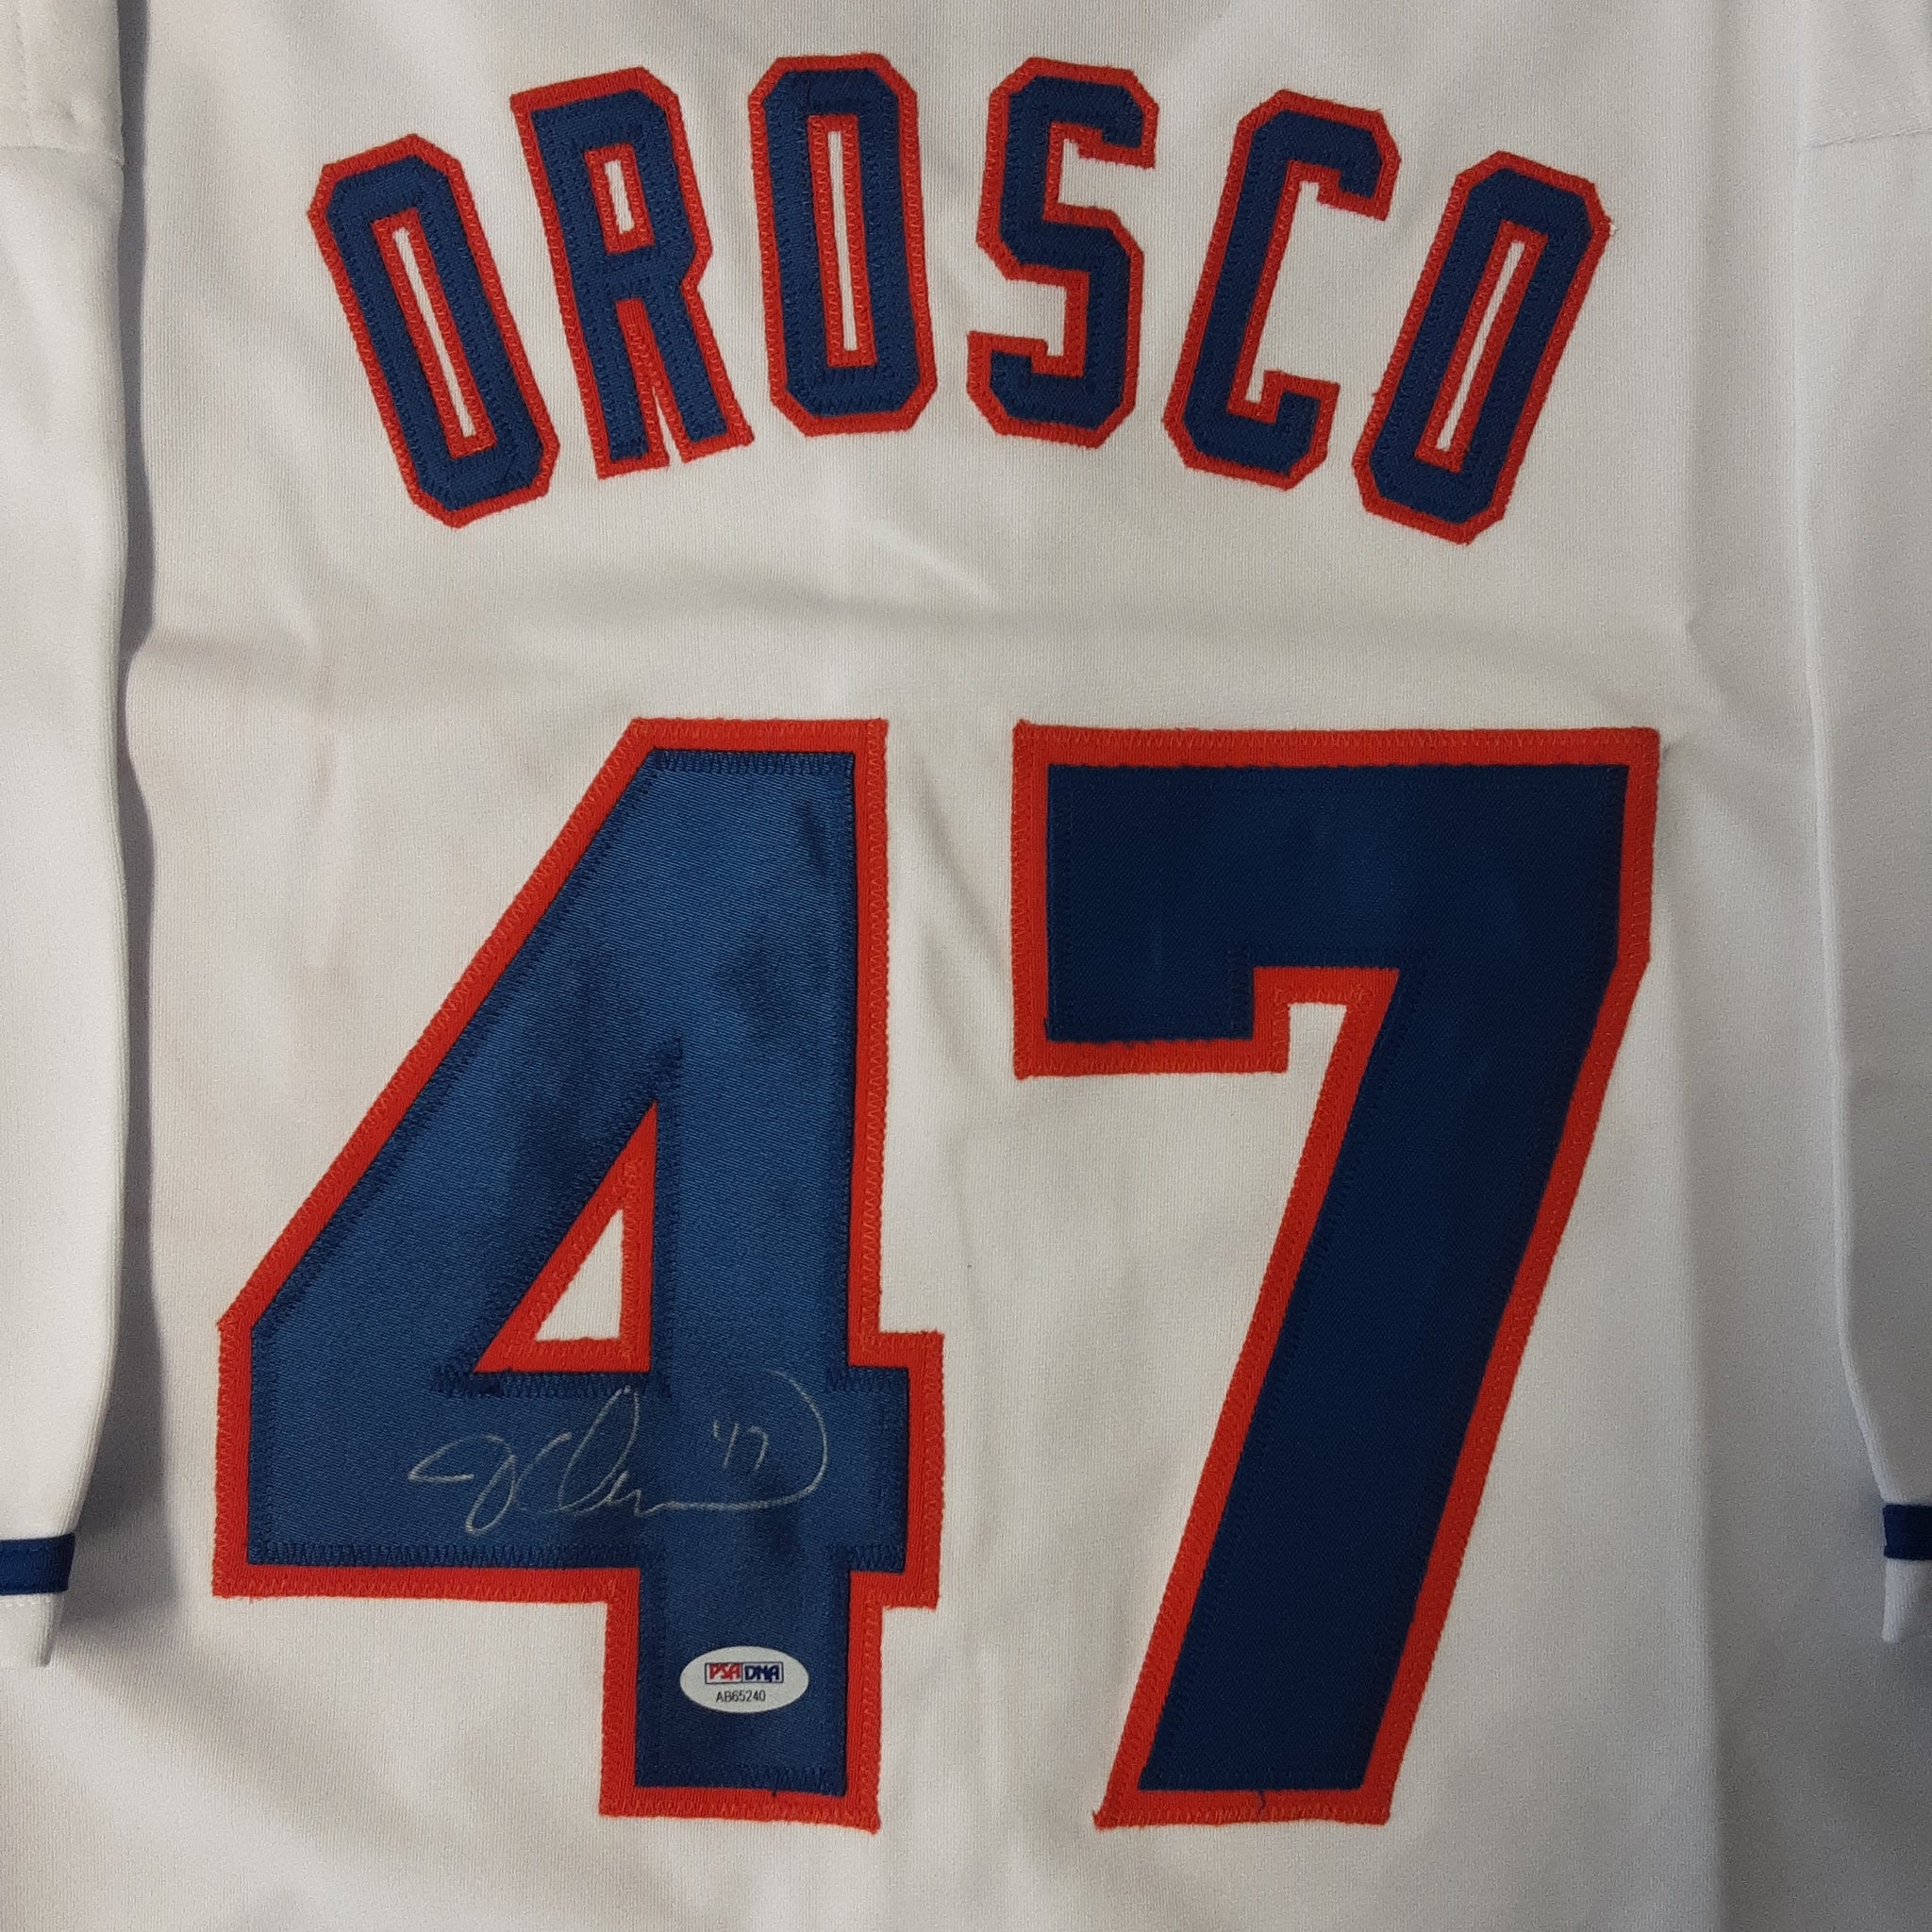 Jesse Orosco Authentic Signed Pro Style Jersey Autographed PSA